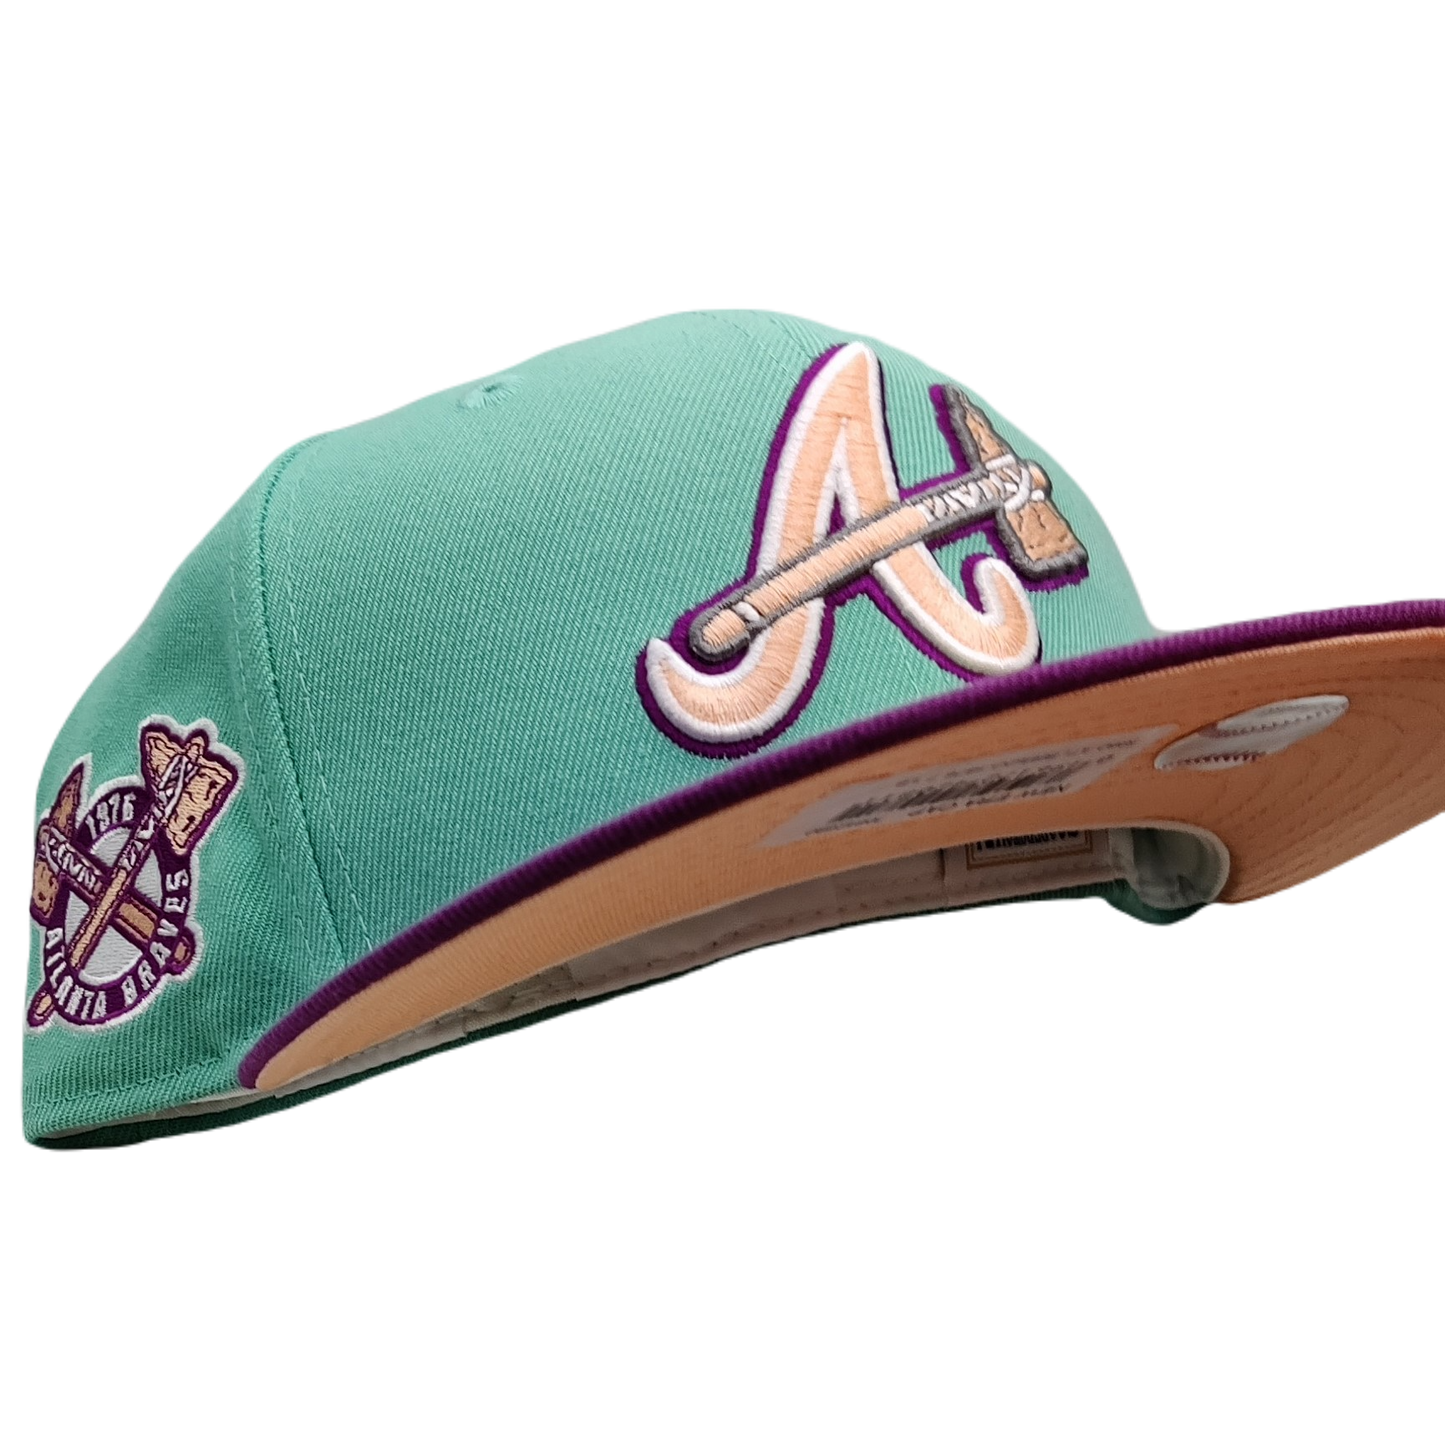 New Era 59Fifty Atlanta Braves Teal/Purple 2-Tone w/ Peach UV Fitted Hat